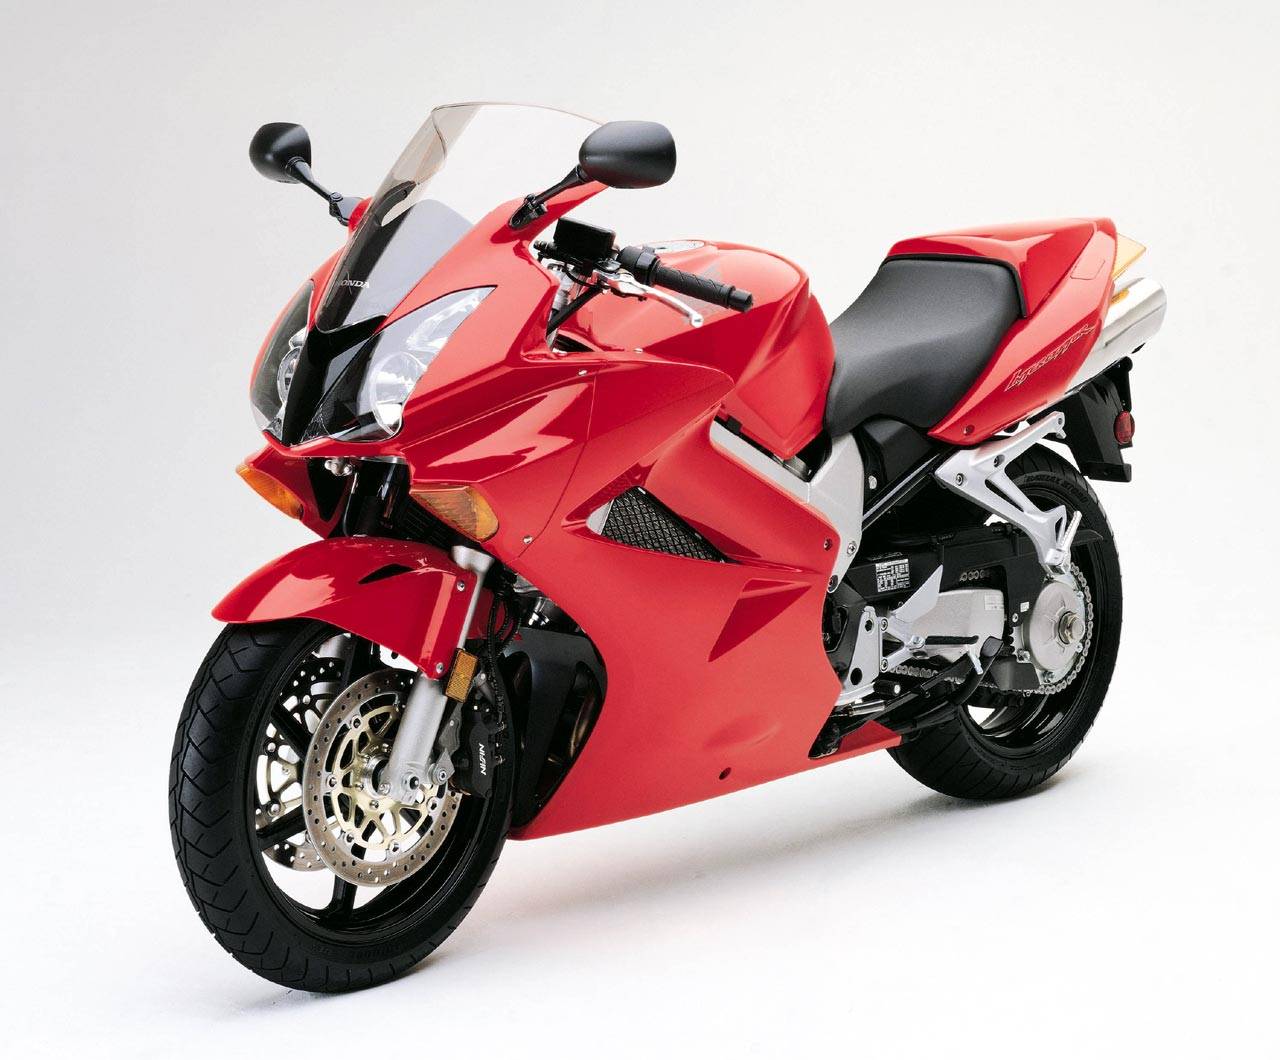 Honda vfr800f (interceptor): review, history, specs - bikeswiki.com, japanese motorcycle encyclopedia